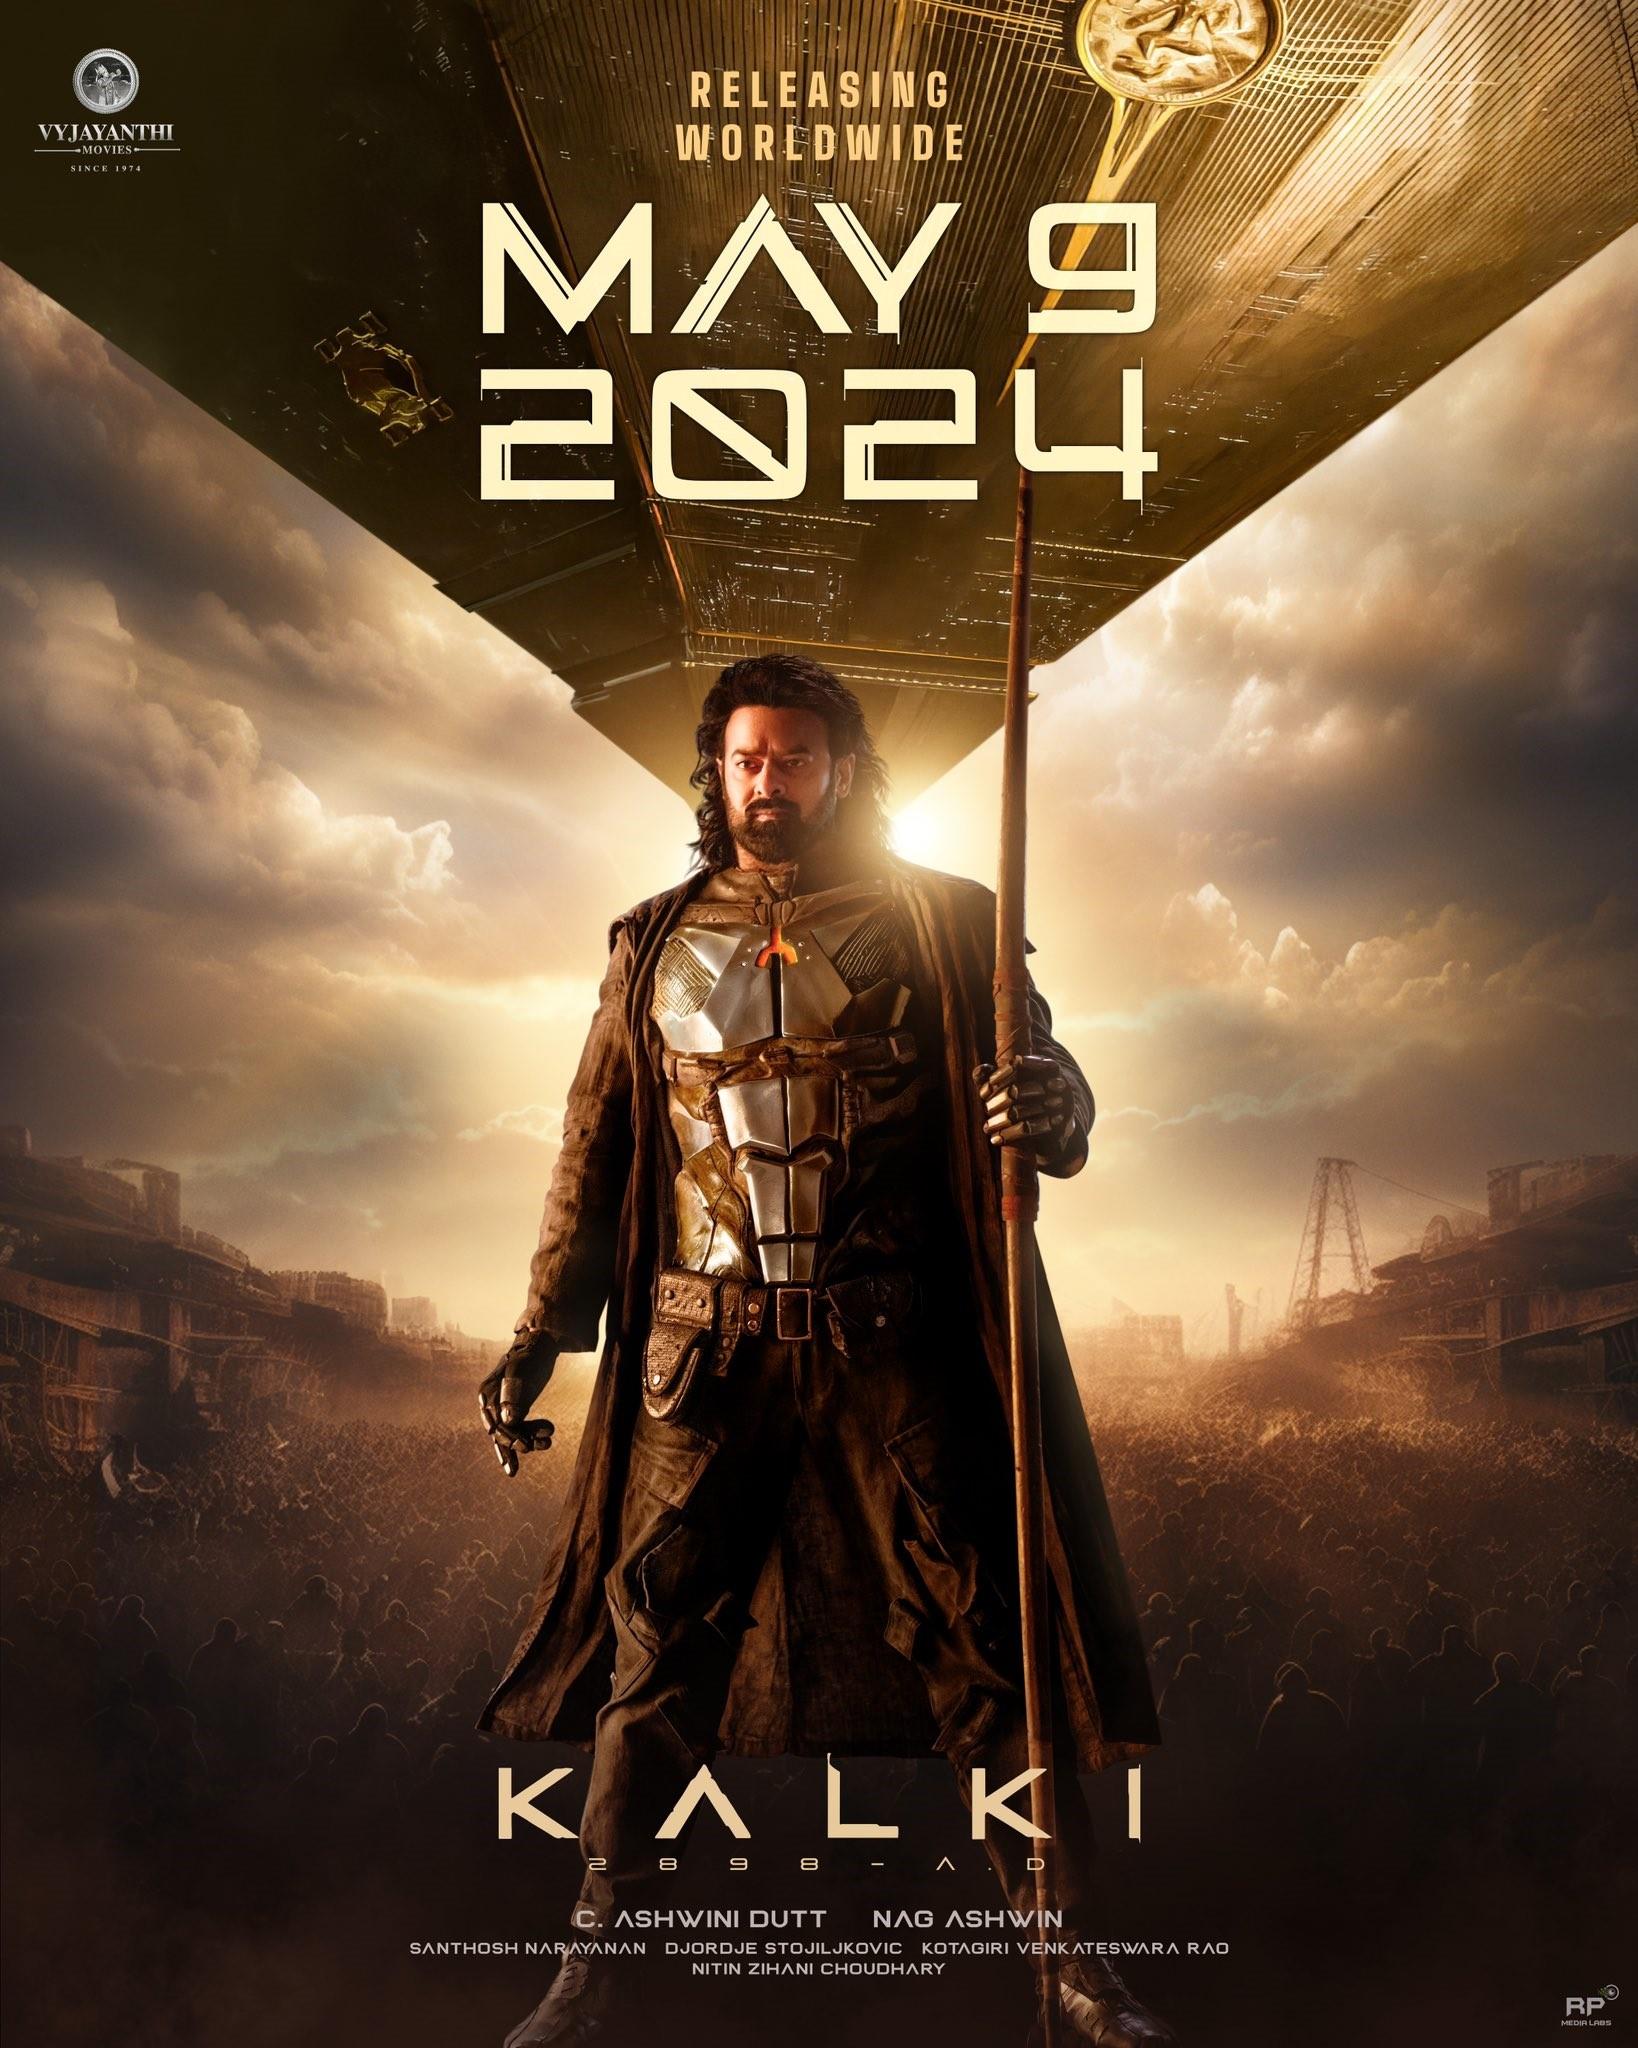 Kalki 2898 AD lead by Prabhas gets new release date, poster "Telugu